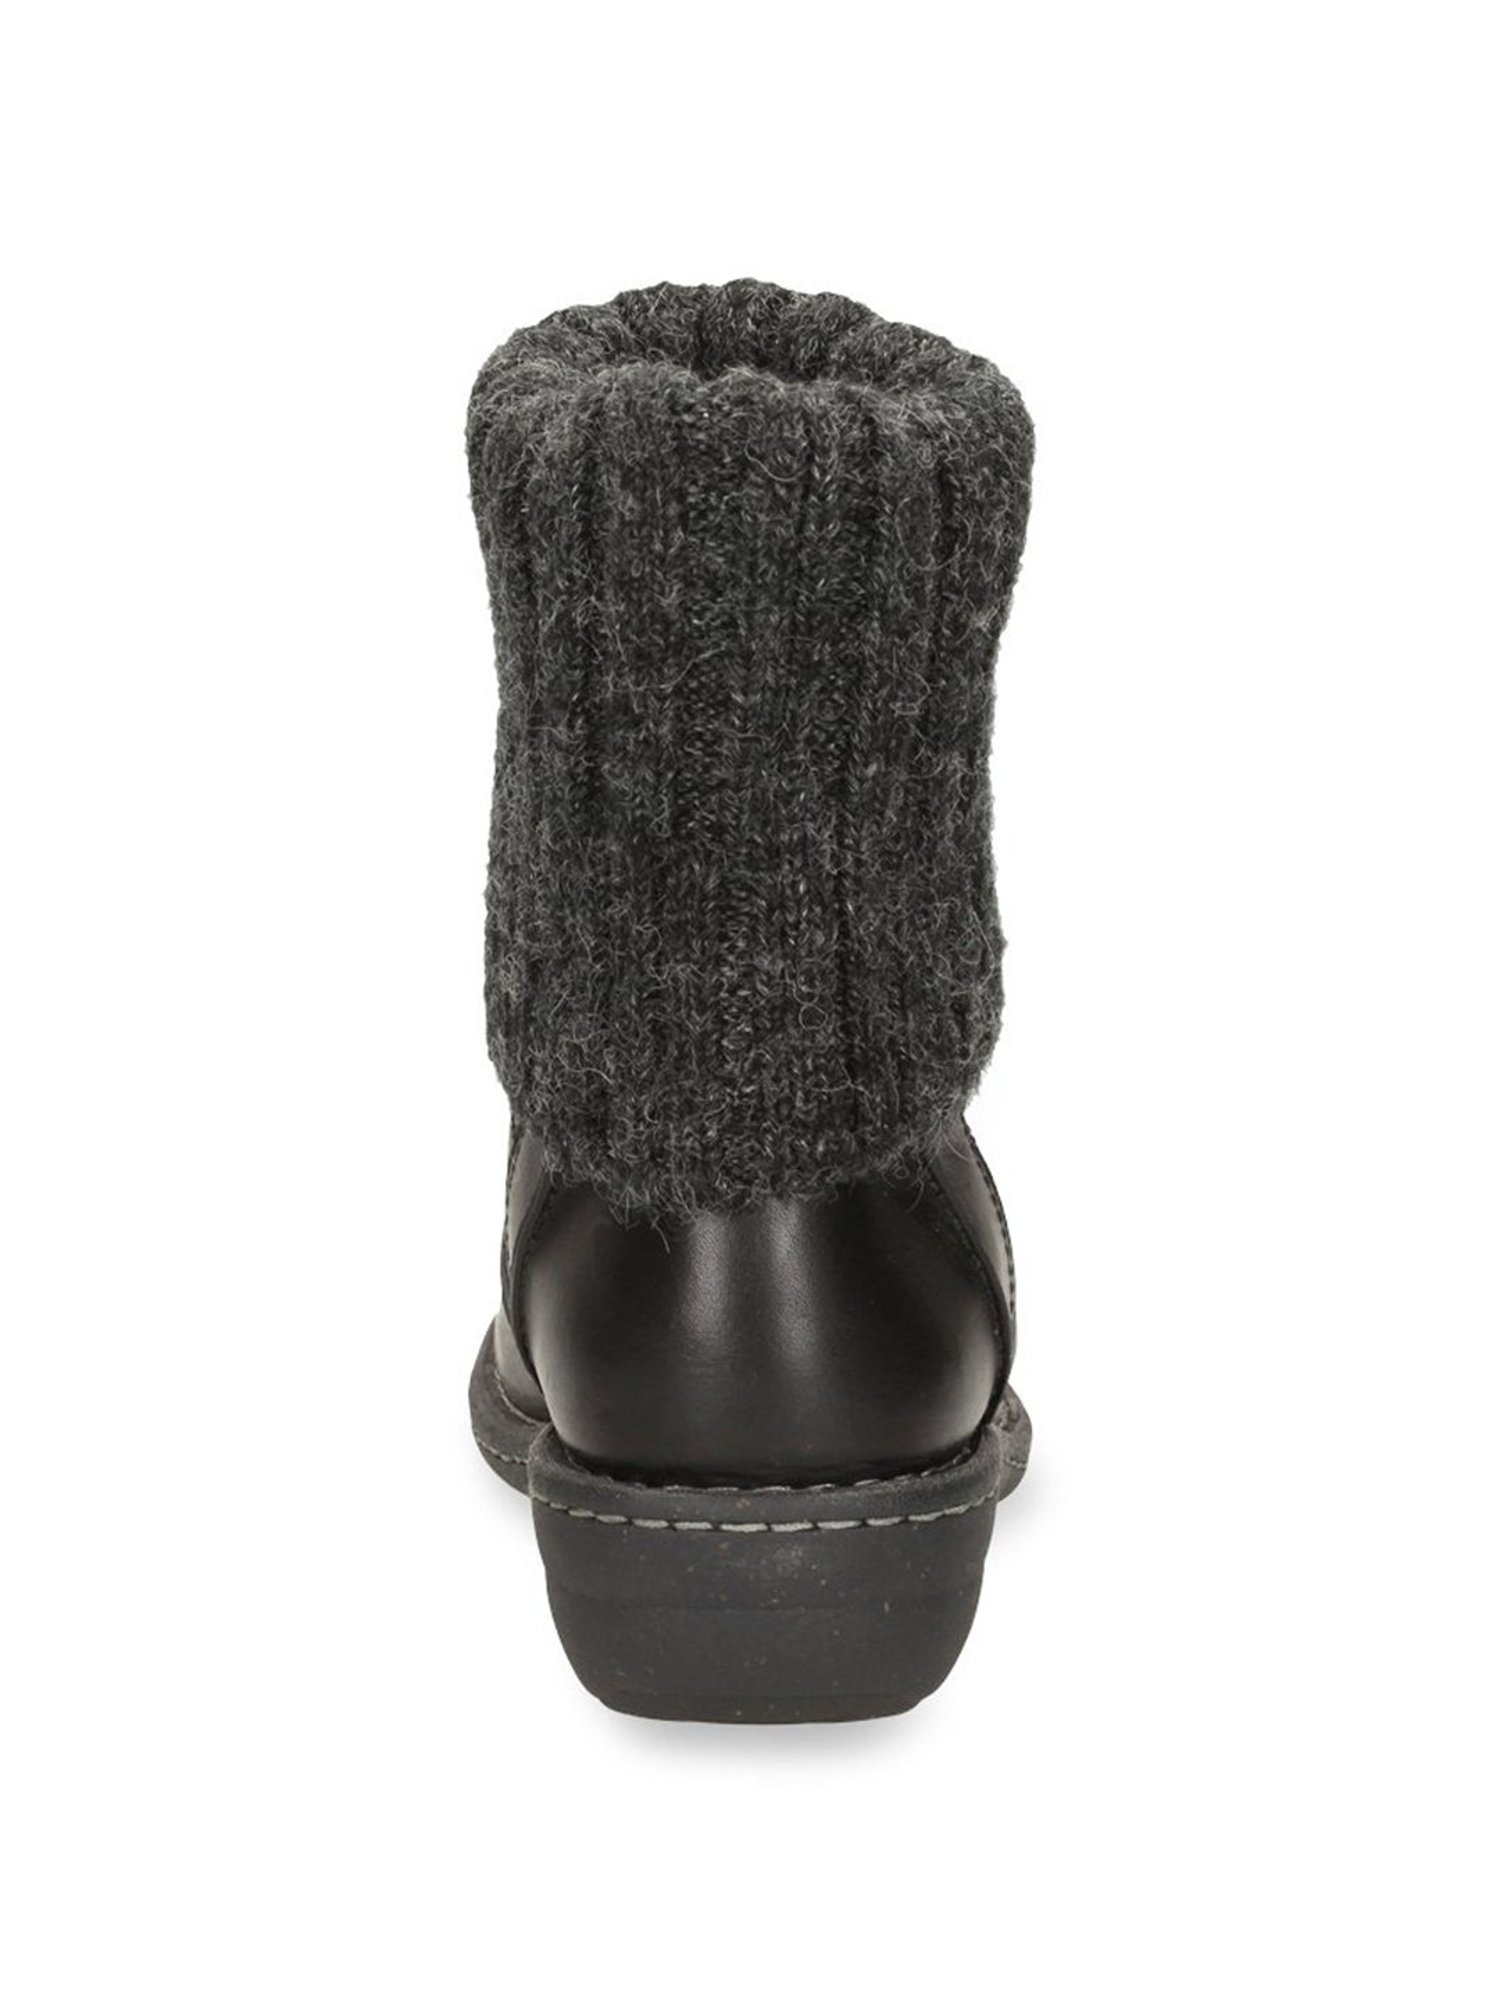 Buy Avington Style Black Snow Boots for Women Best Price @ Tata CLiQ